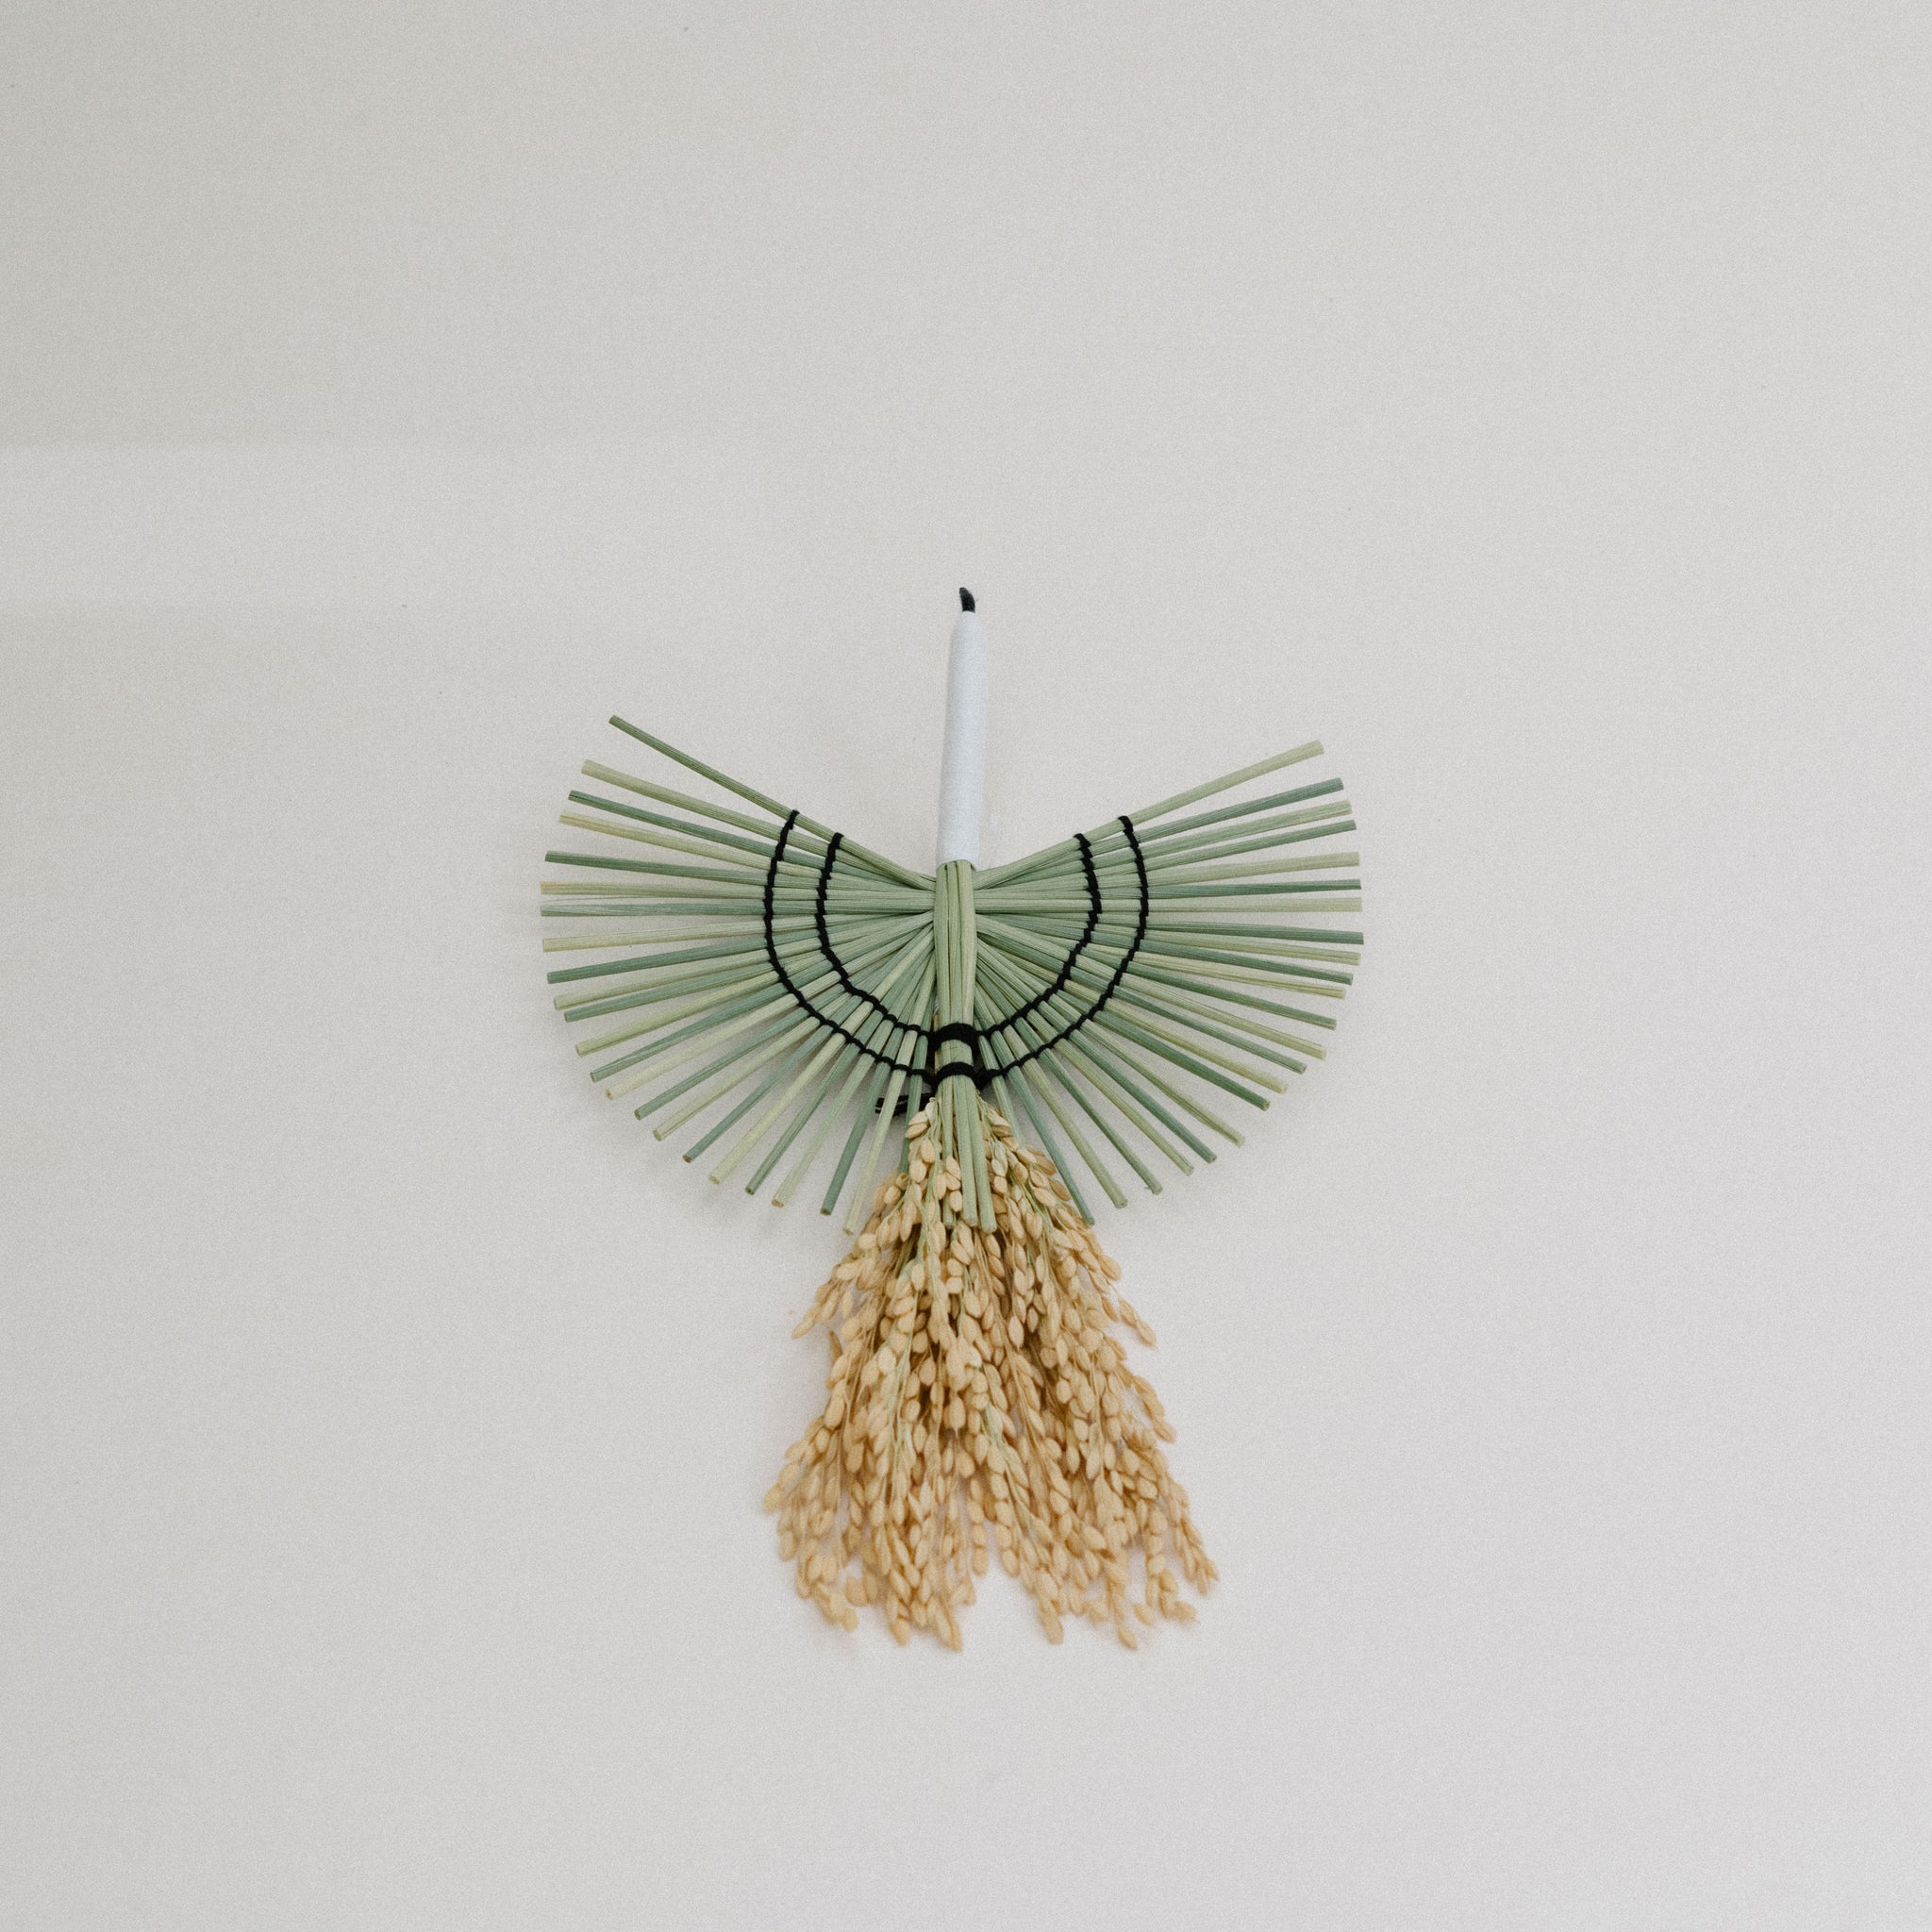 Woven Straw Wall Decoration – Crane